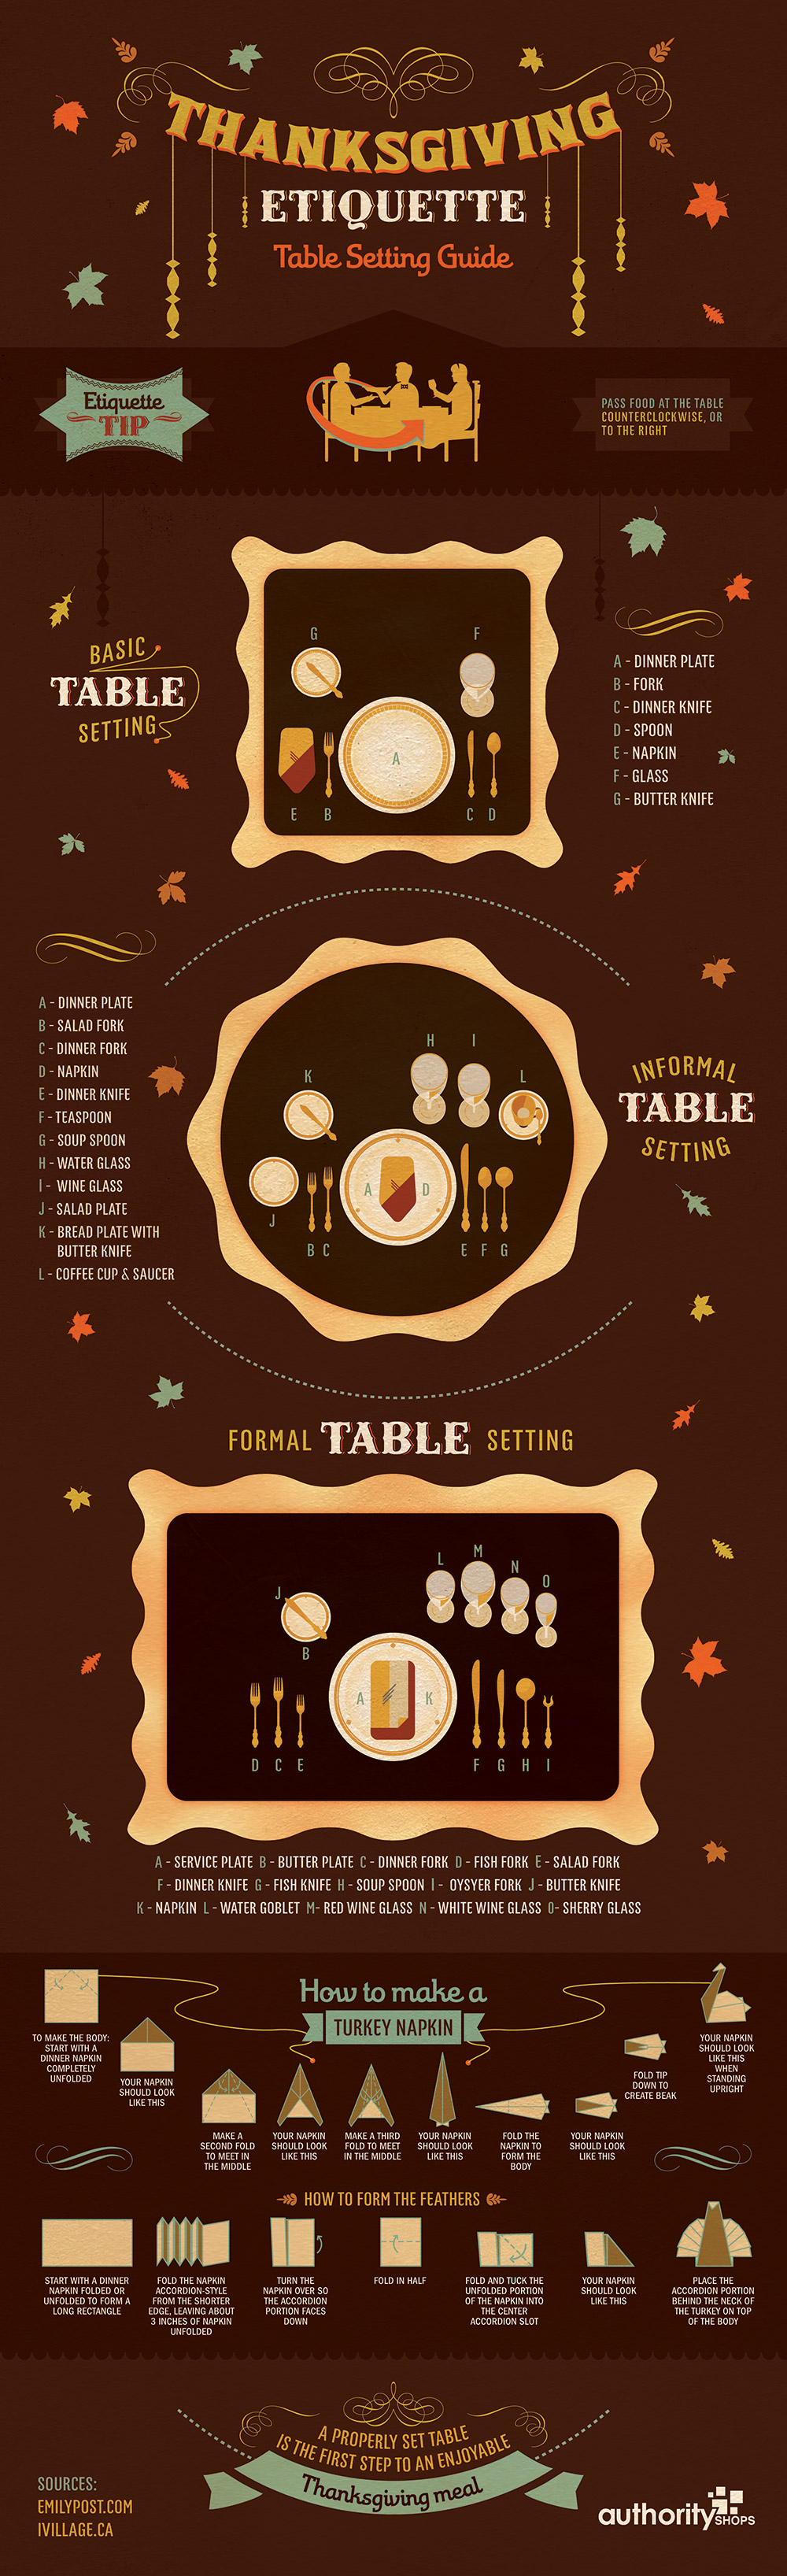 Thanksgiving Etiquette Table Setting Guide